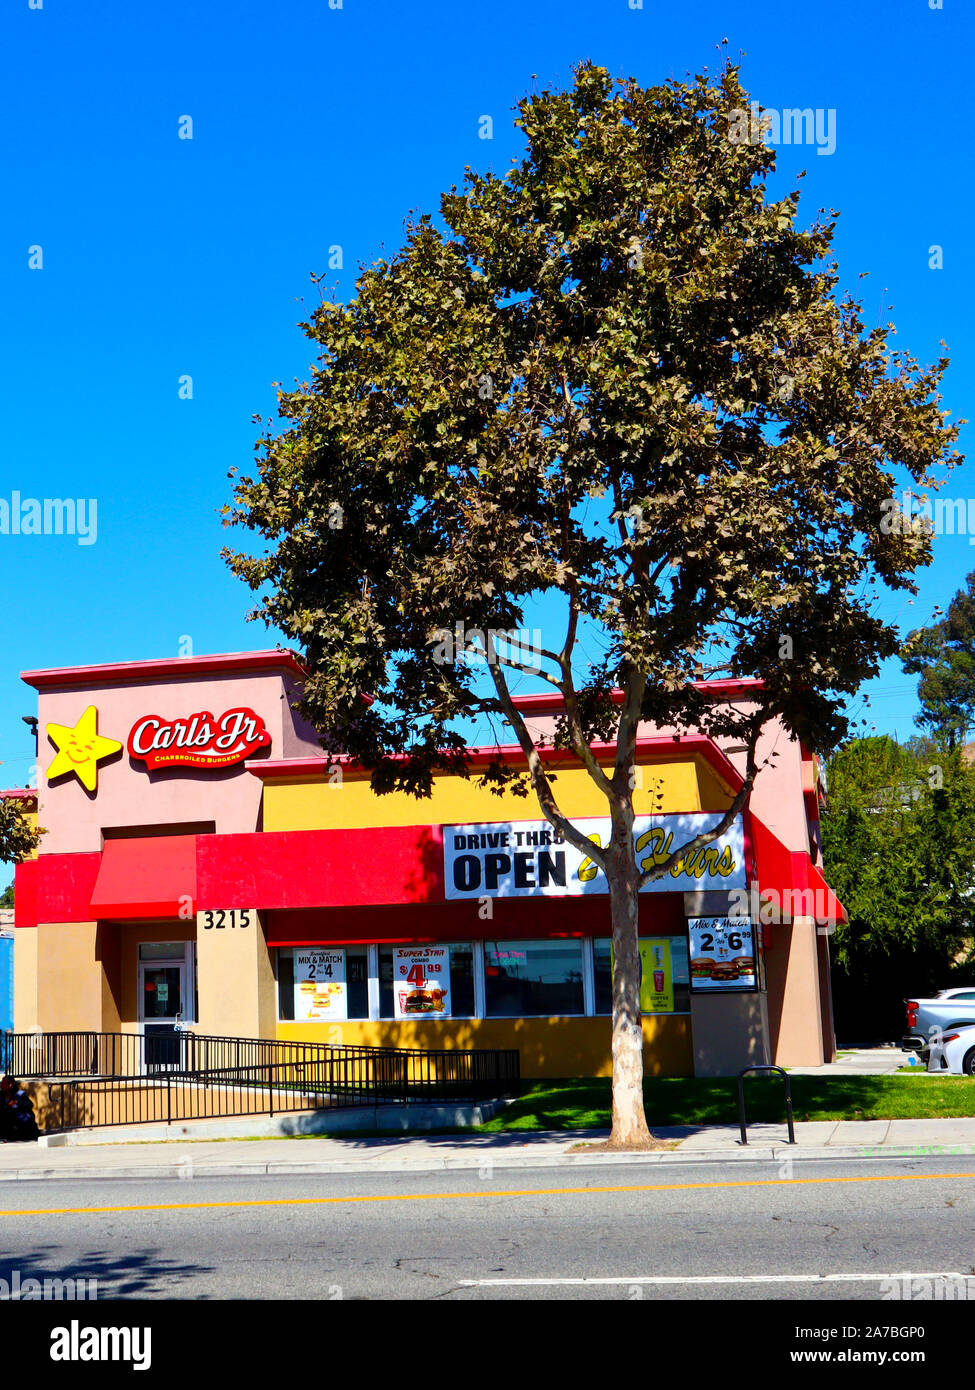 Carl's Jr. Charbroiled Burger, amerikanischen Fast-Food-Restaurant Stockfoto